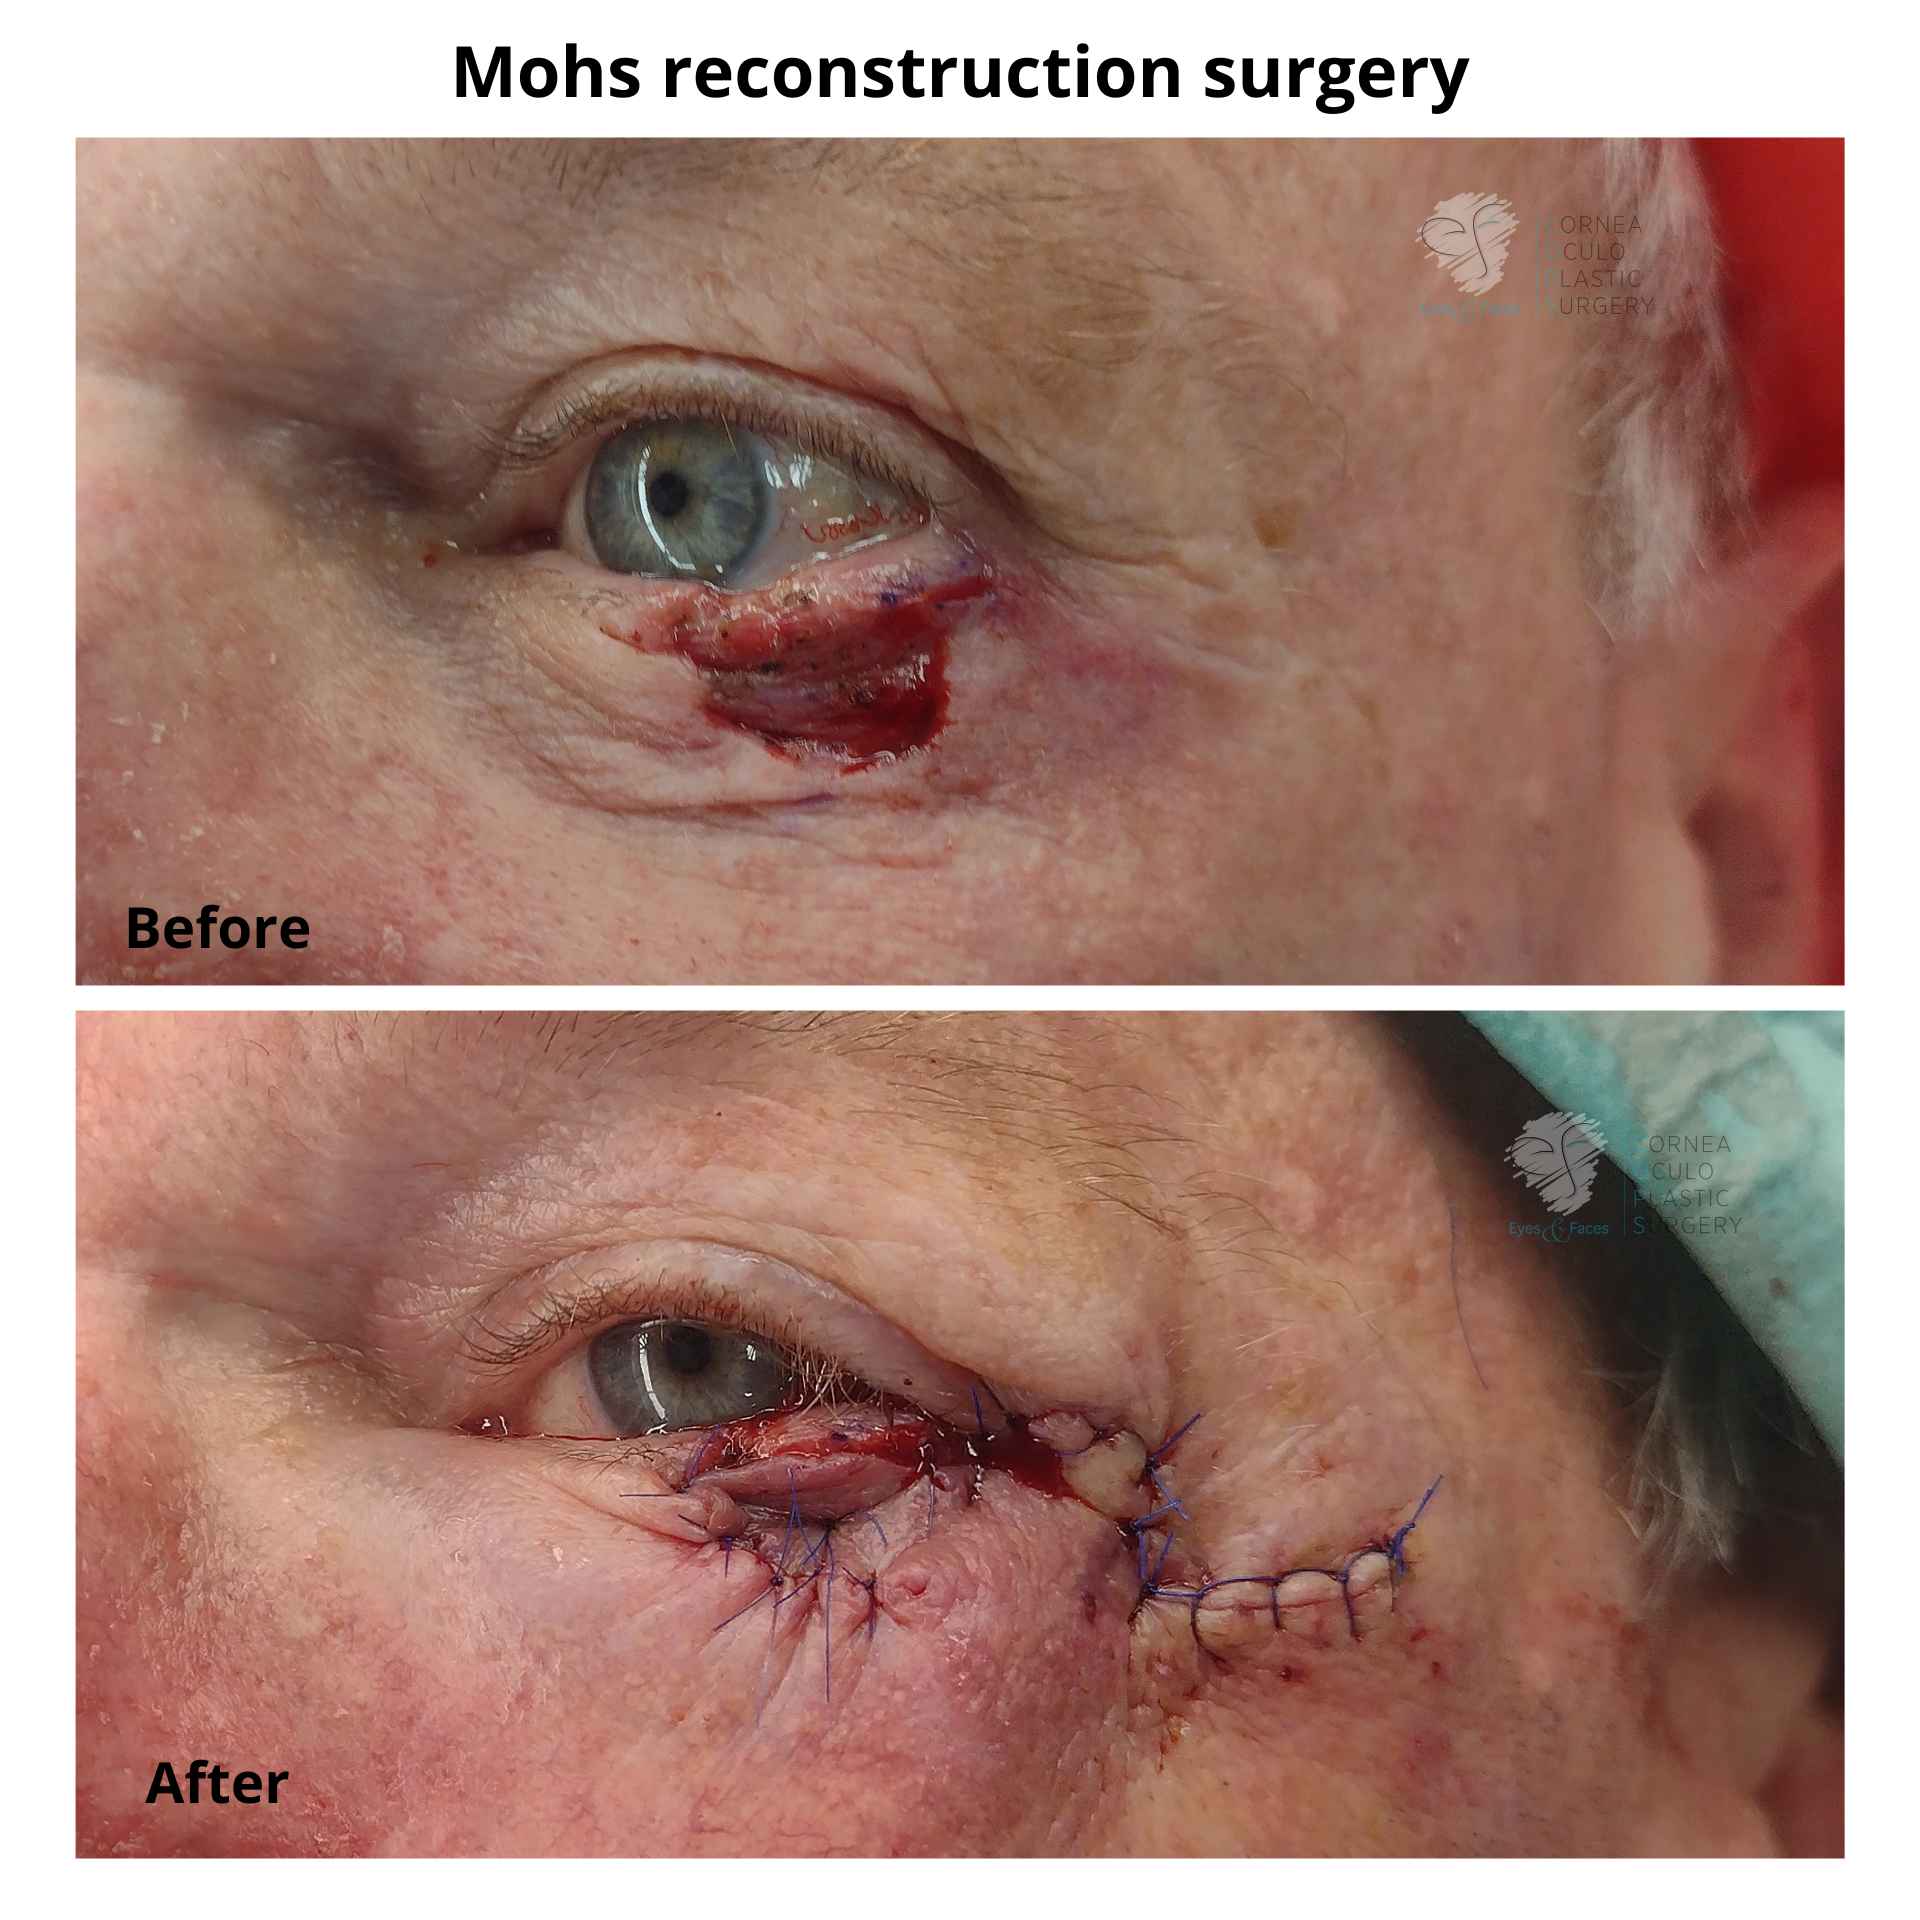 Mohs reconstruction surgery